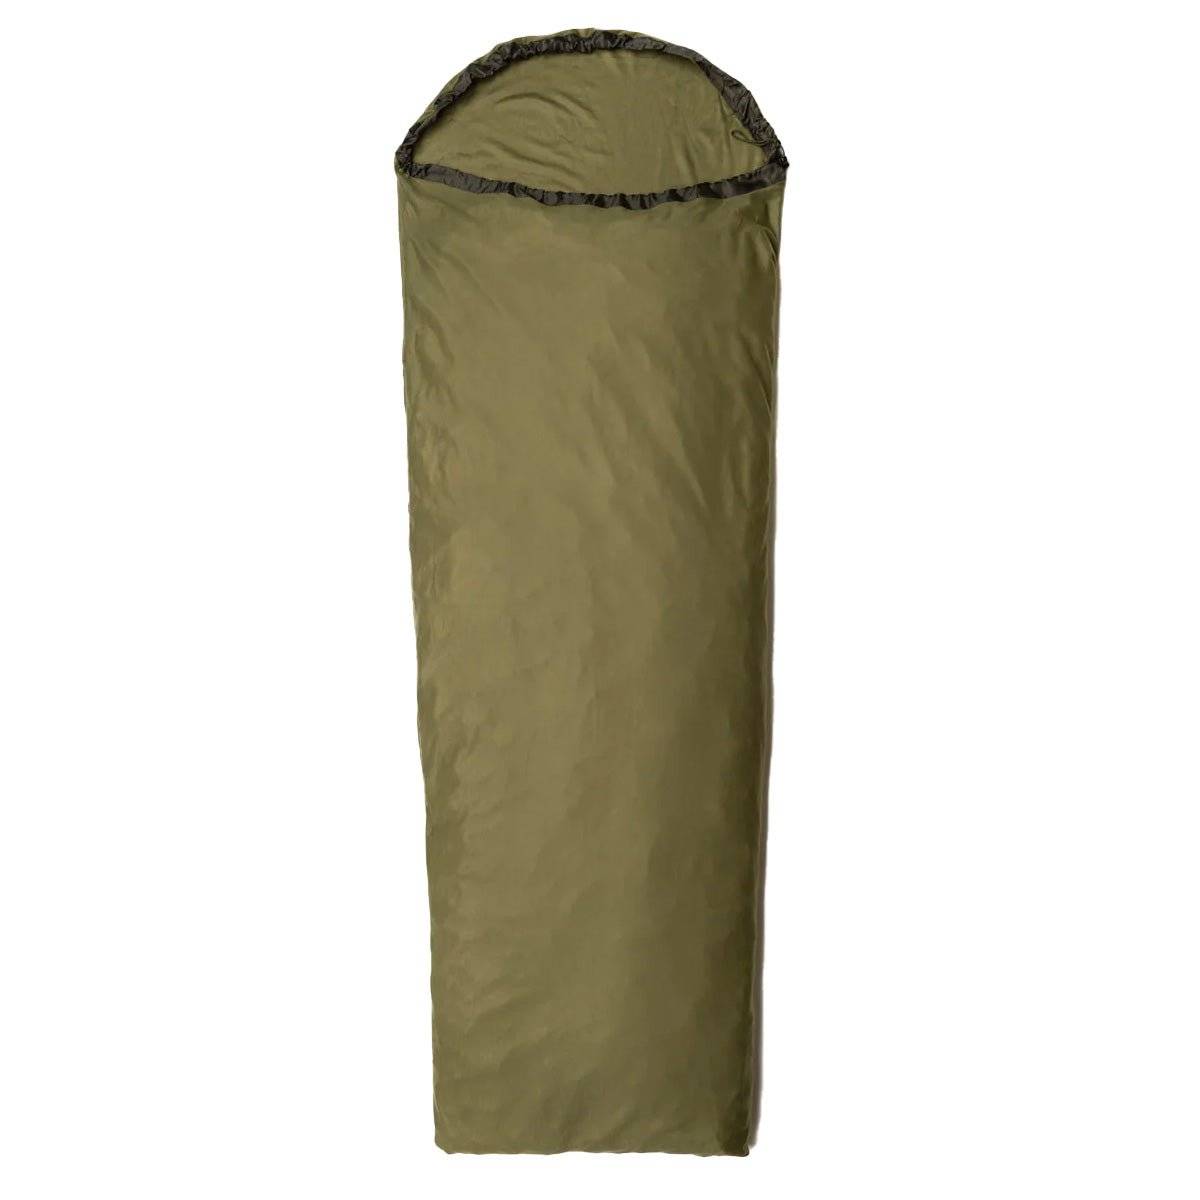 Snugpak TS1 Sleeping Bag Liner - John Bull Clothing